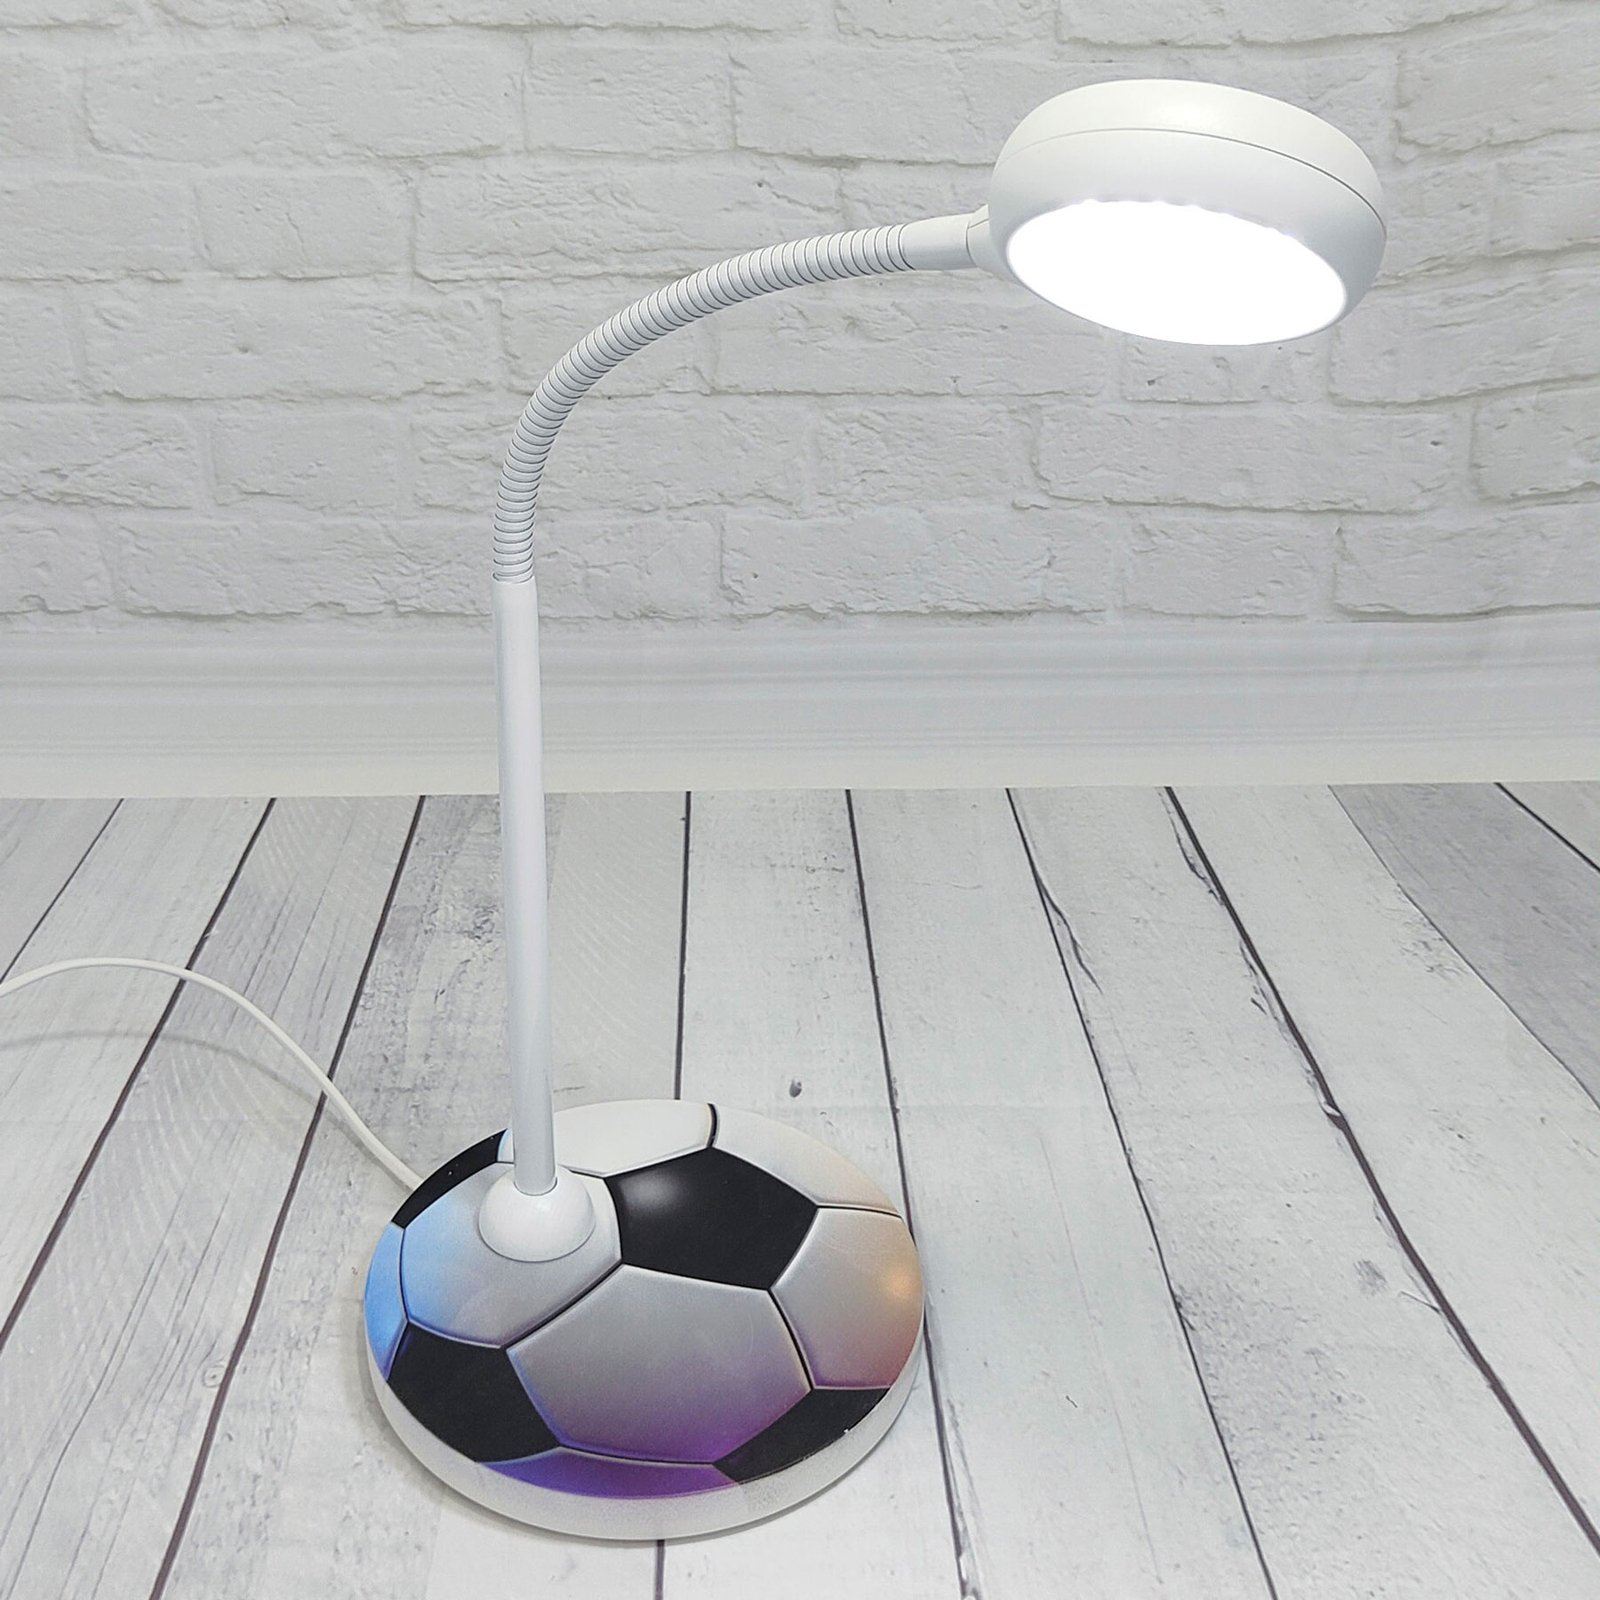 Football table lamp, flexible arm